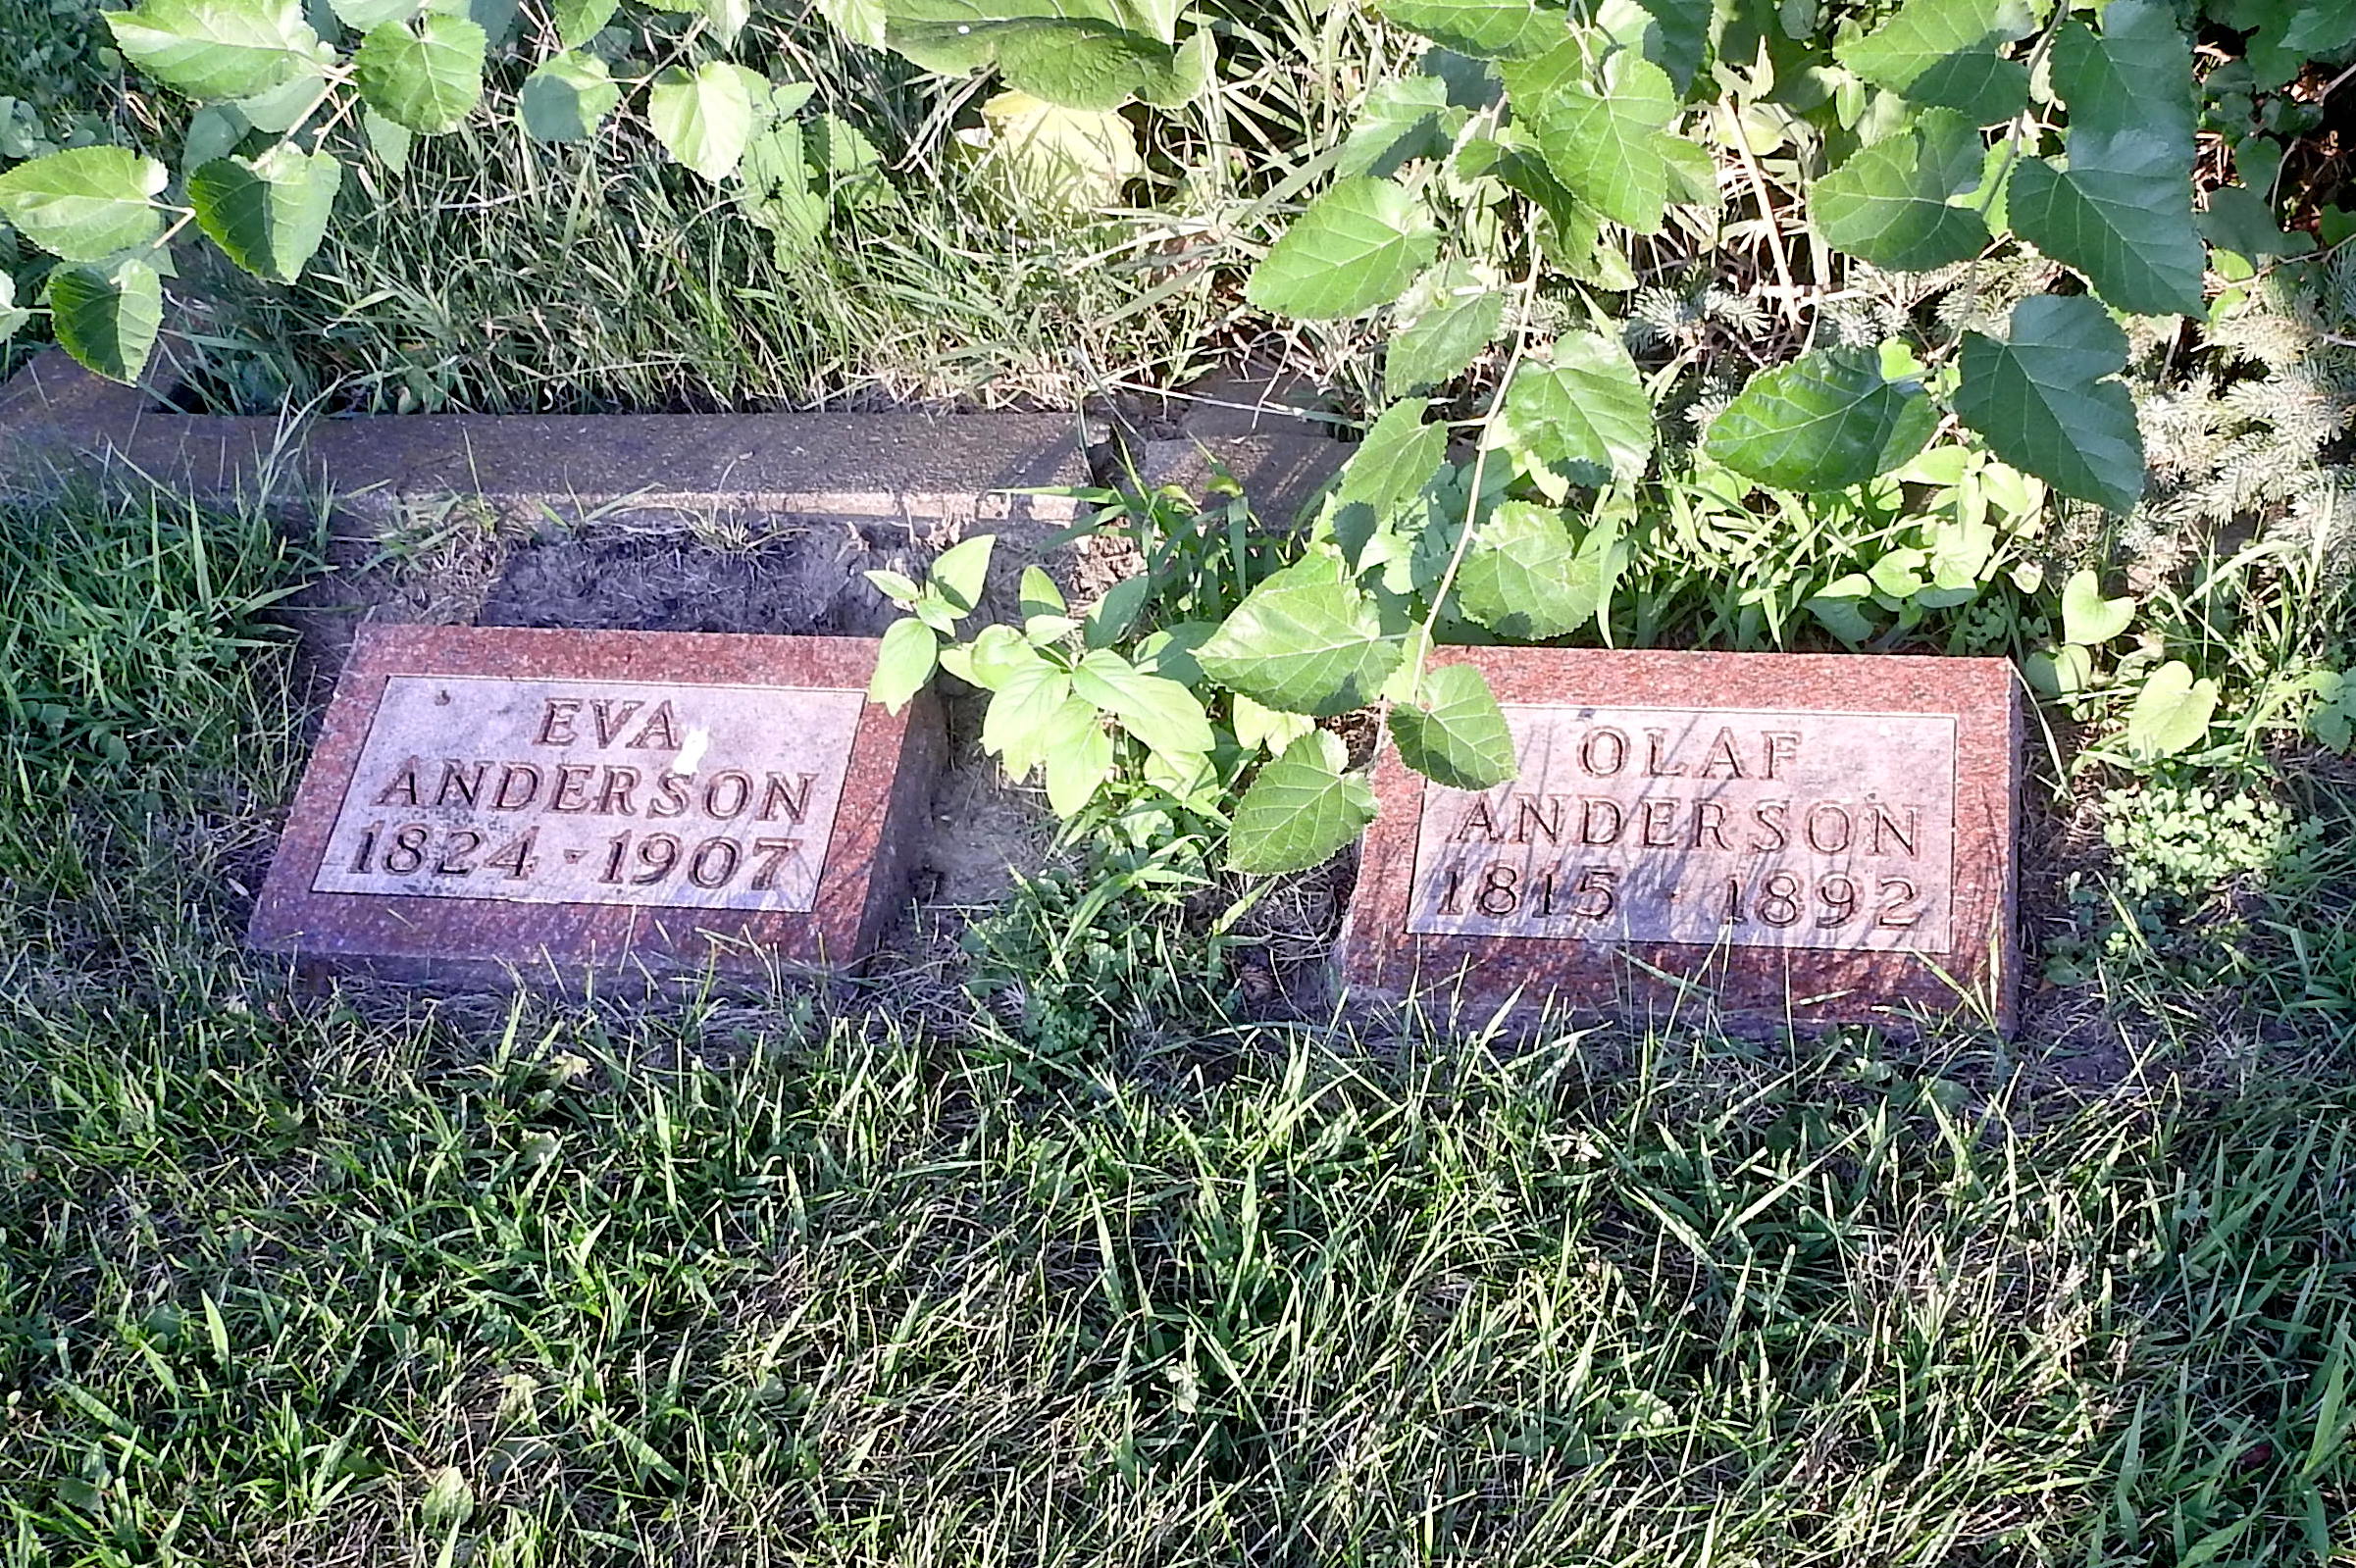 Eva 1824-1907 and Olof 1815-1892